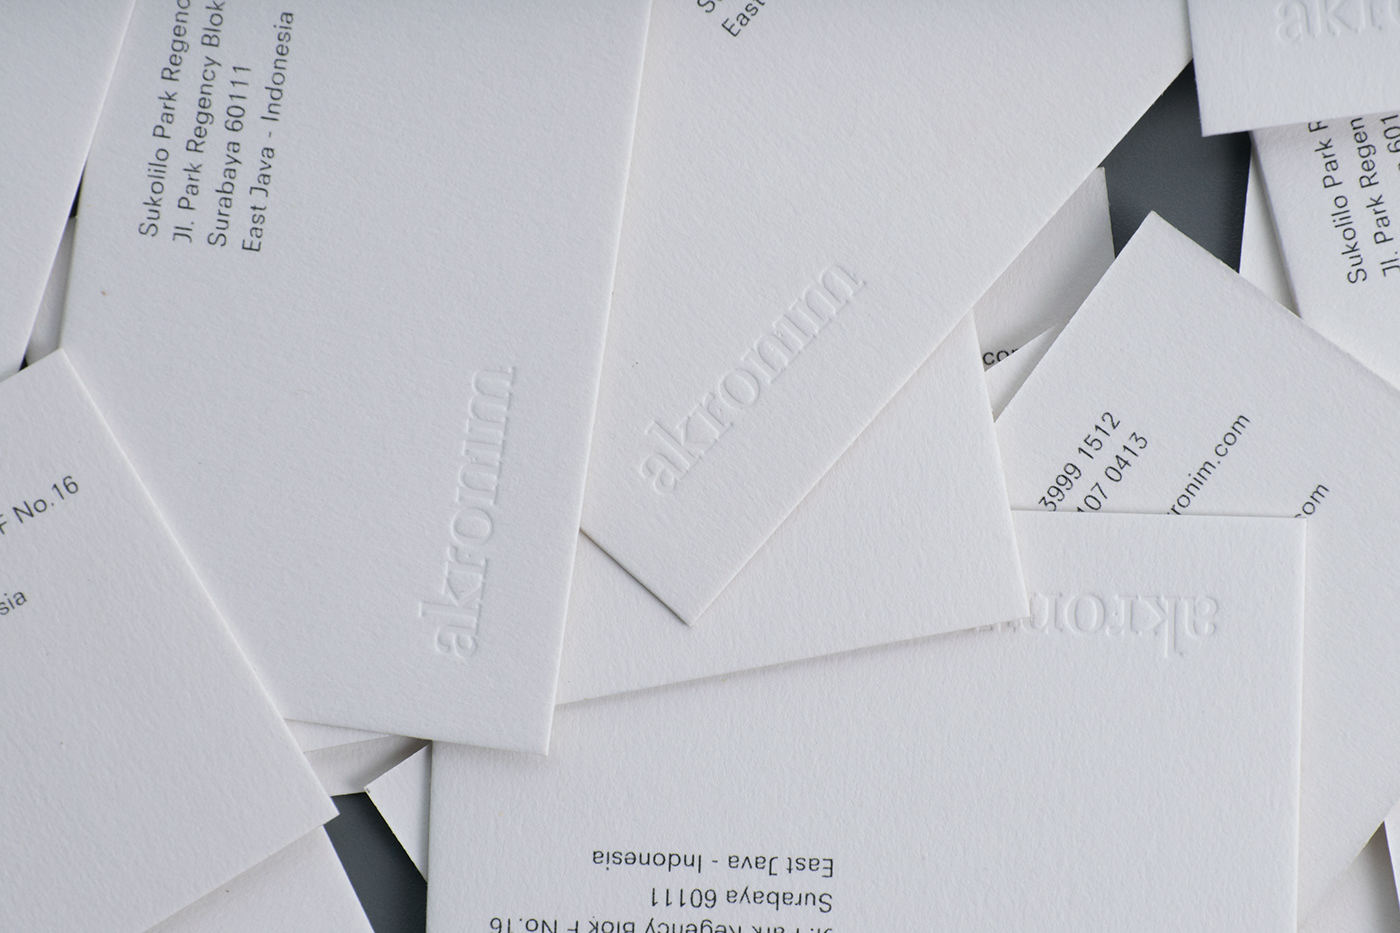 AKRONIM identity branding  logo logodesign minimalist graphic design  studio simple White